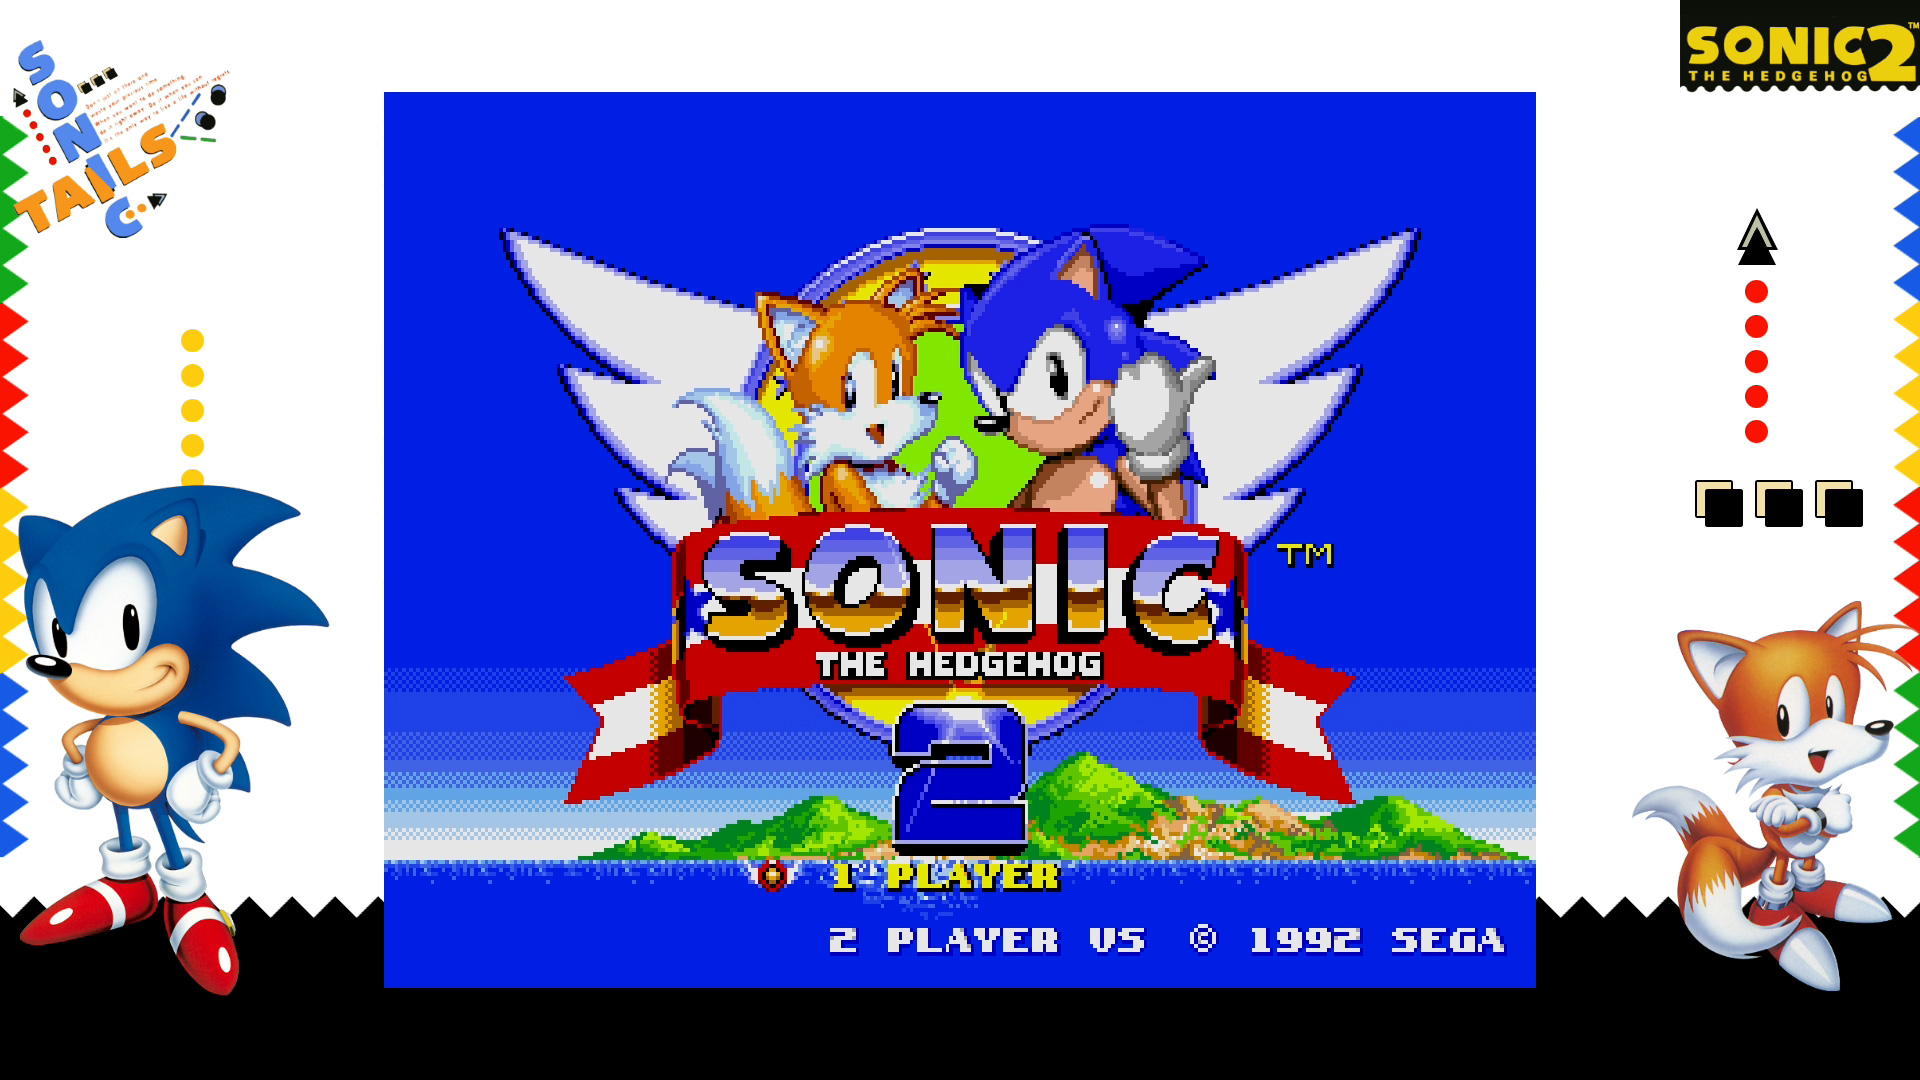 Sega Sonic the Hedgehog 2 Games